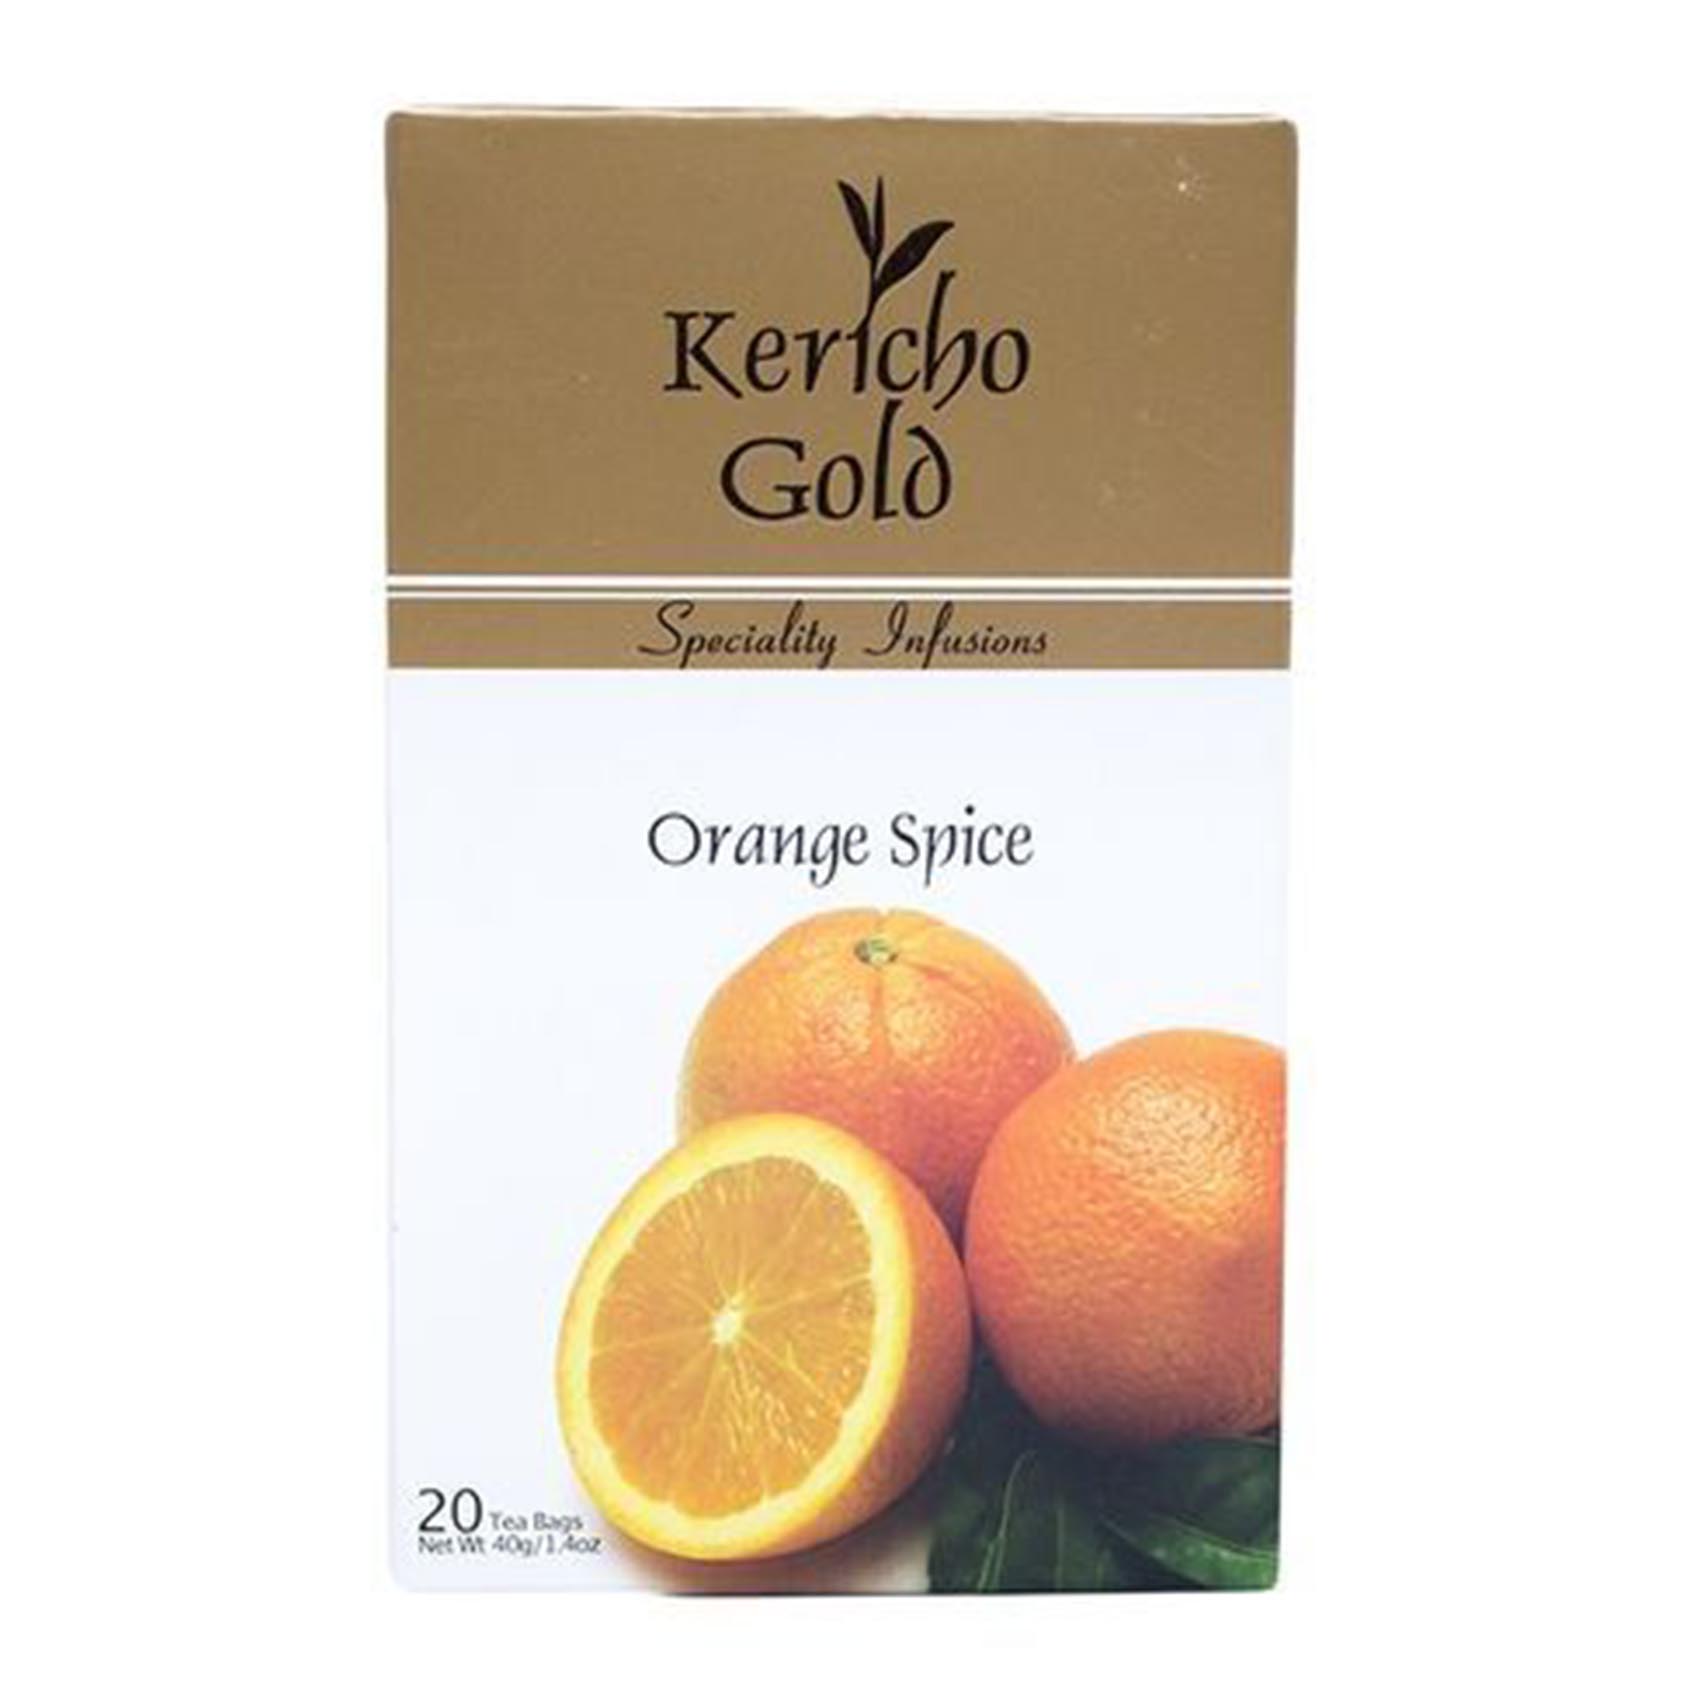 Kericho Gold Orange Spice Tea Bags 2g x Pack of 20